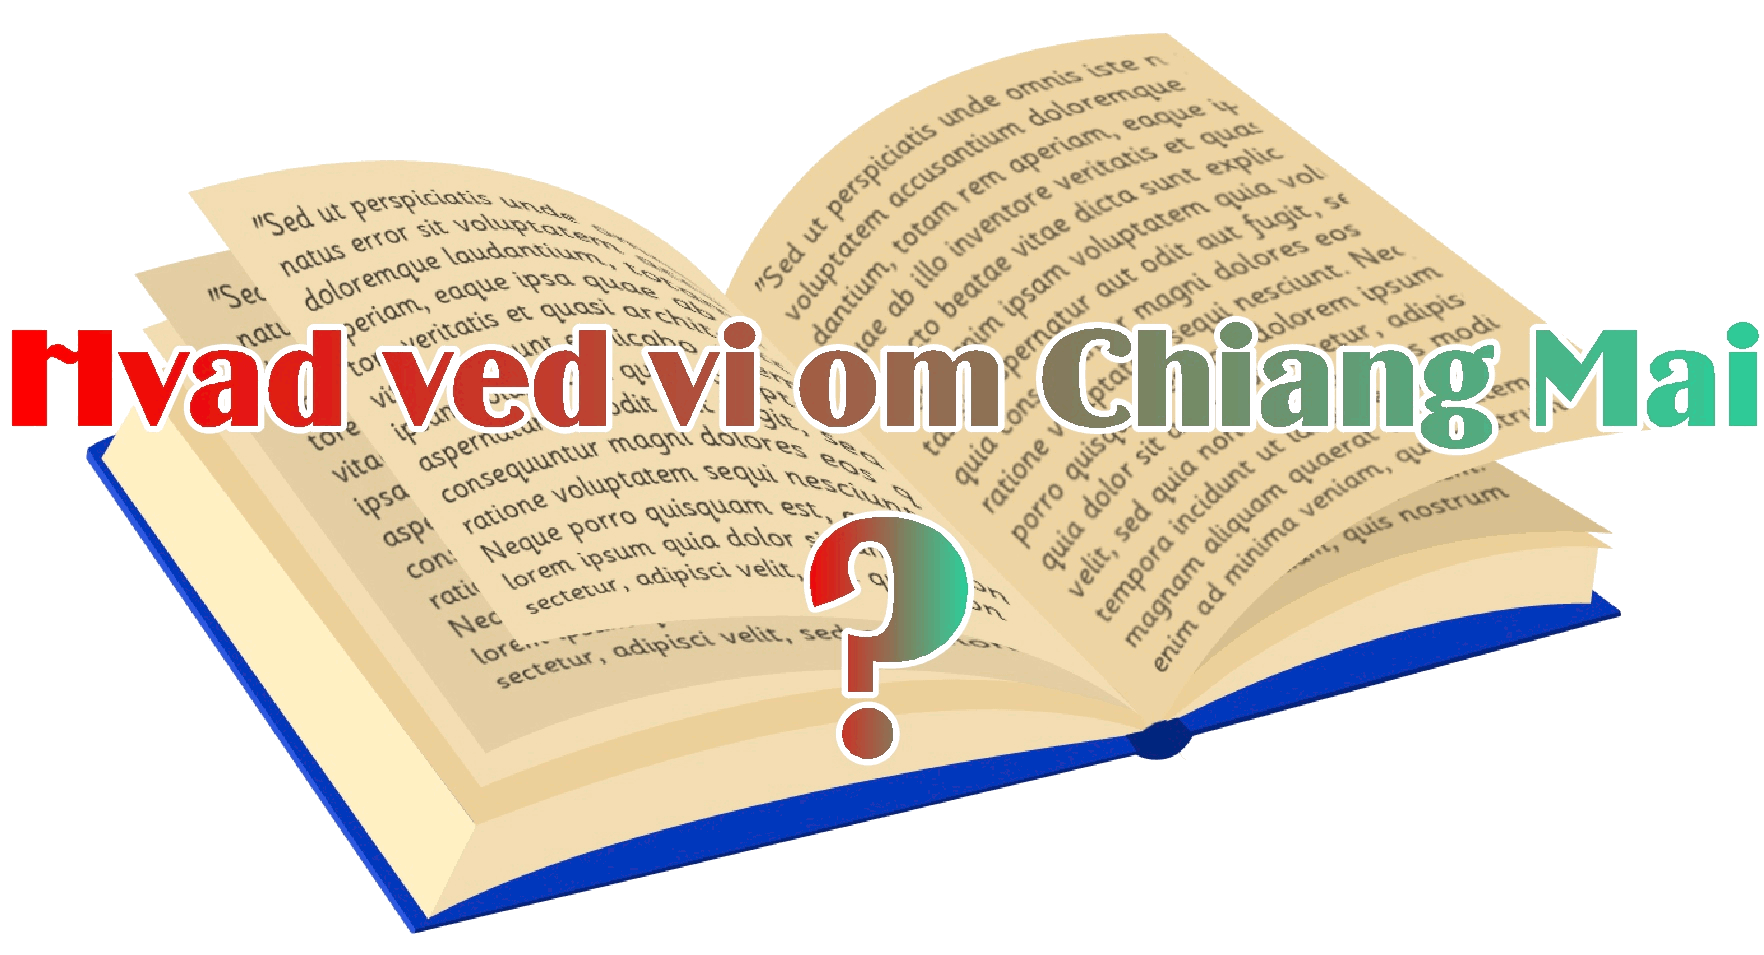 hvad ved vi om chiang mai